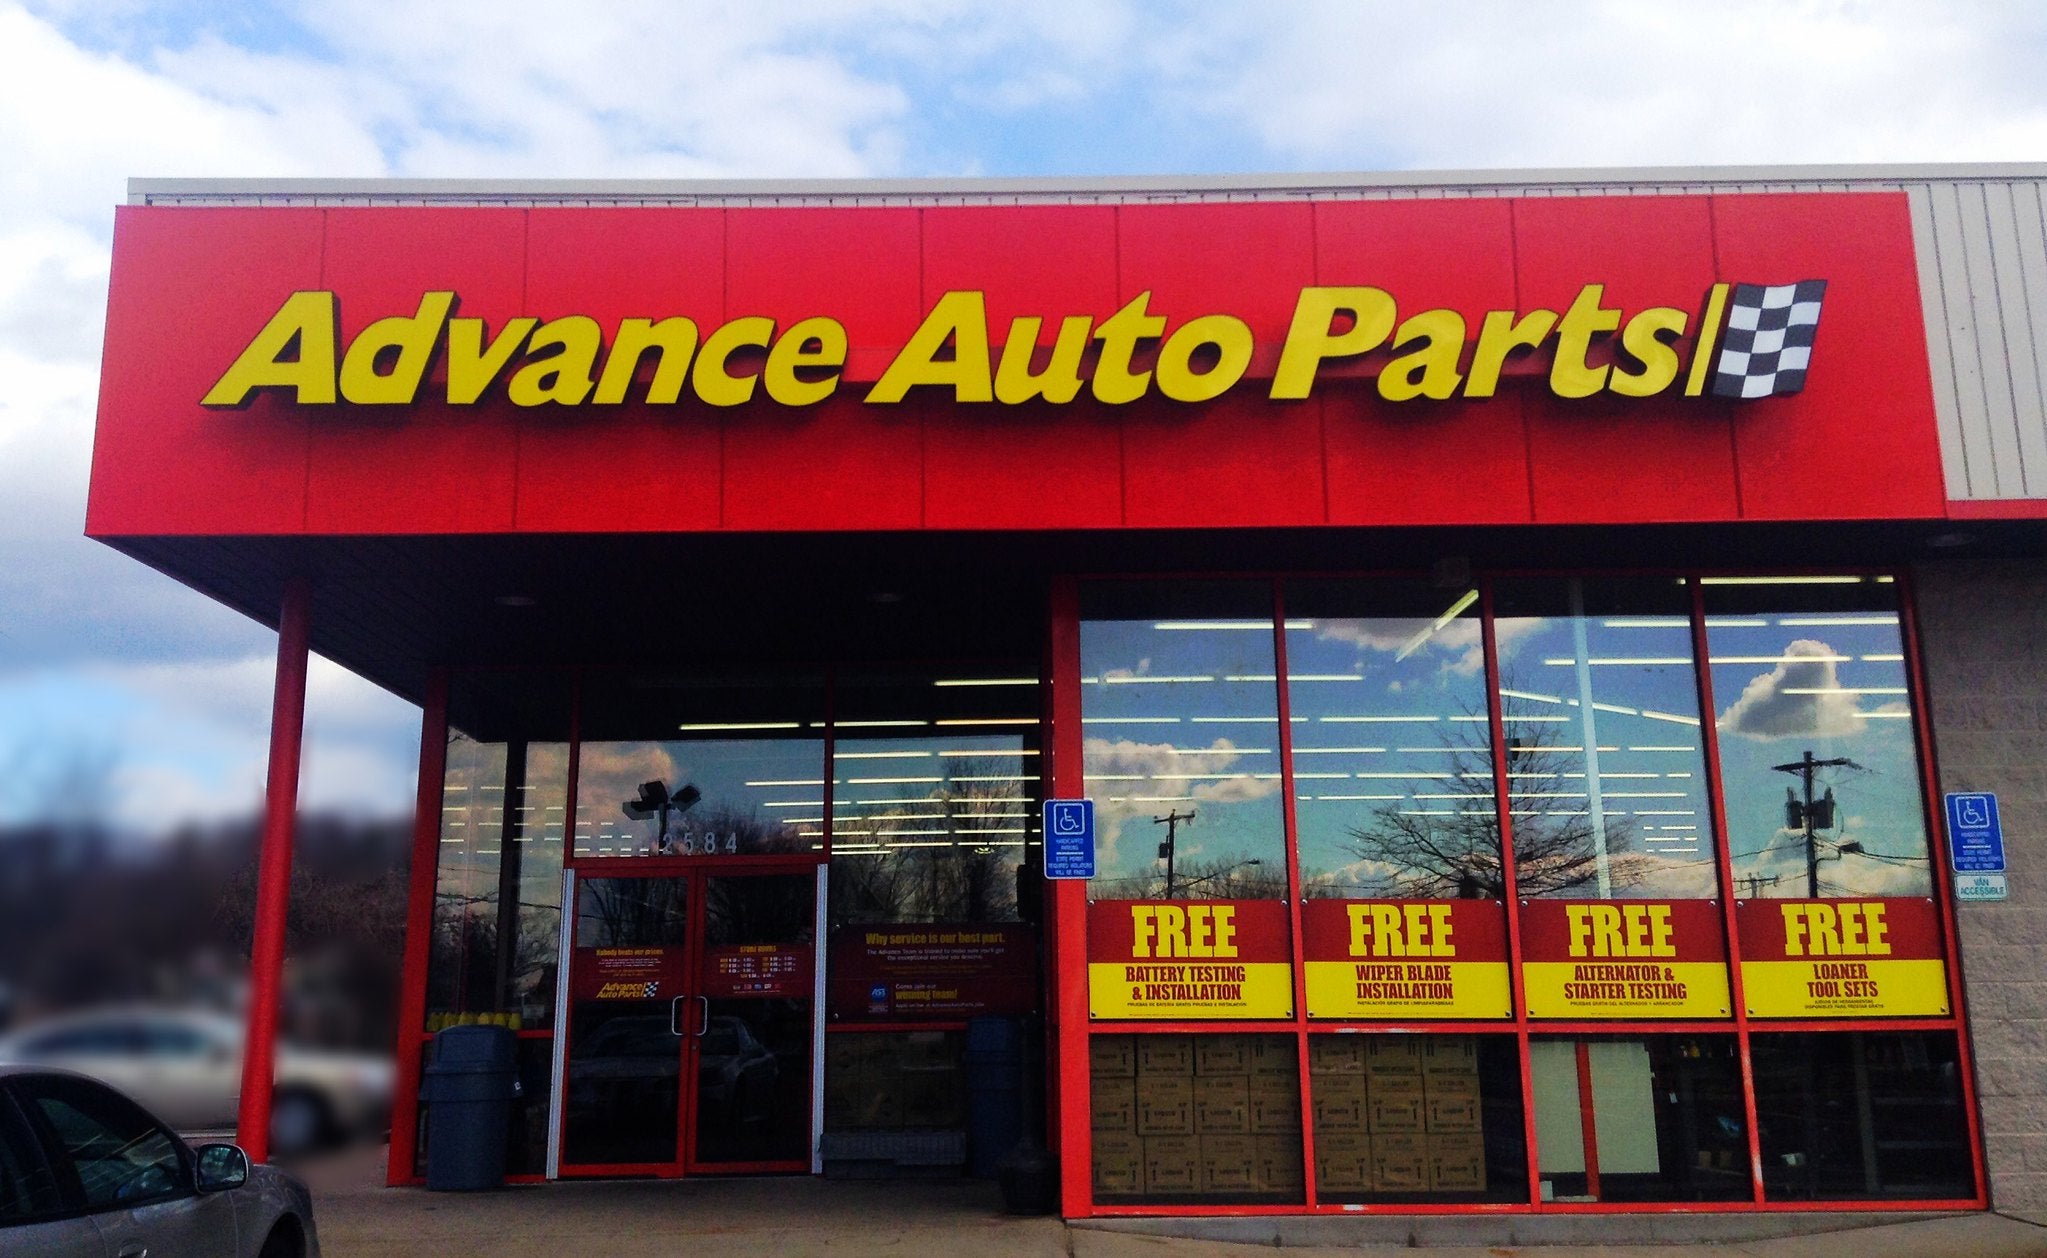 Vehicle Care Kits - Advance Auto Parts